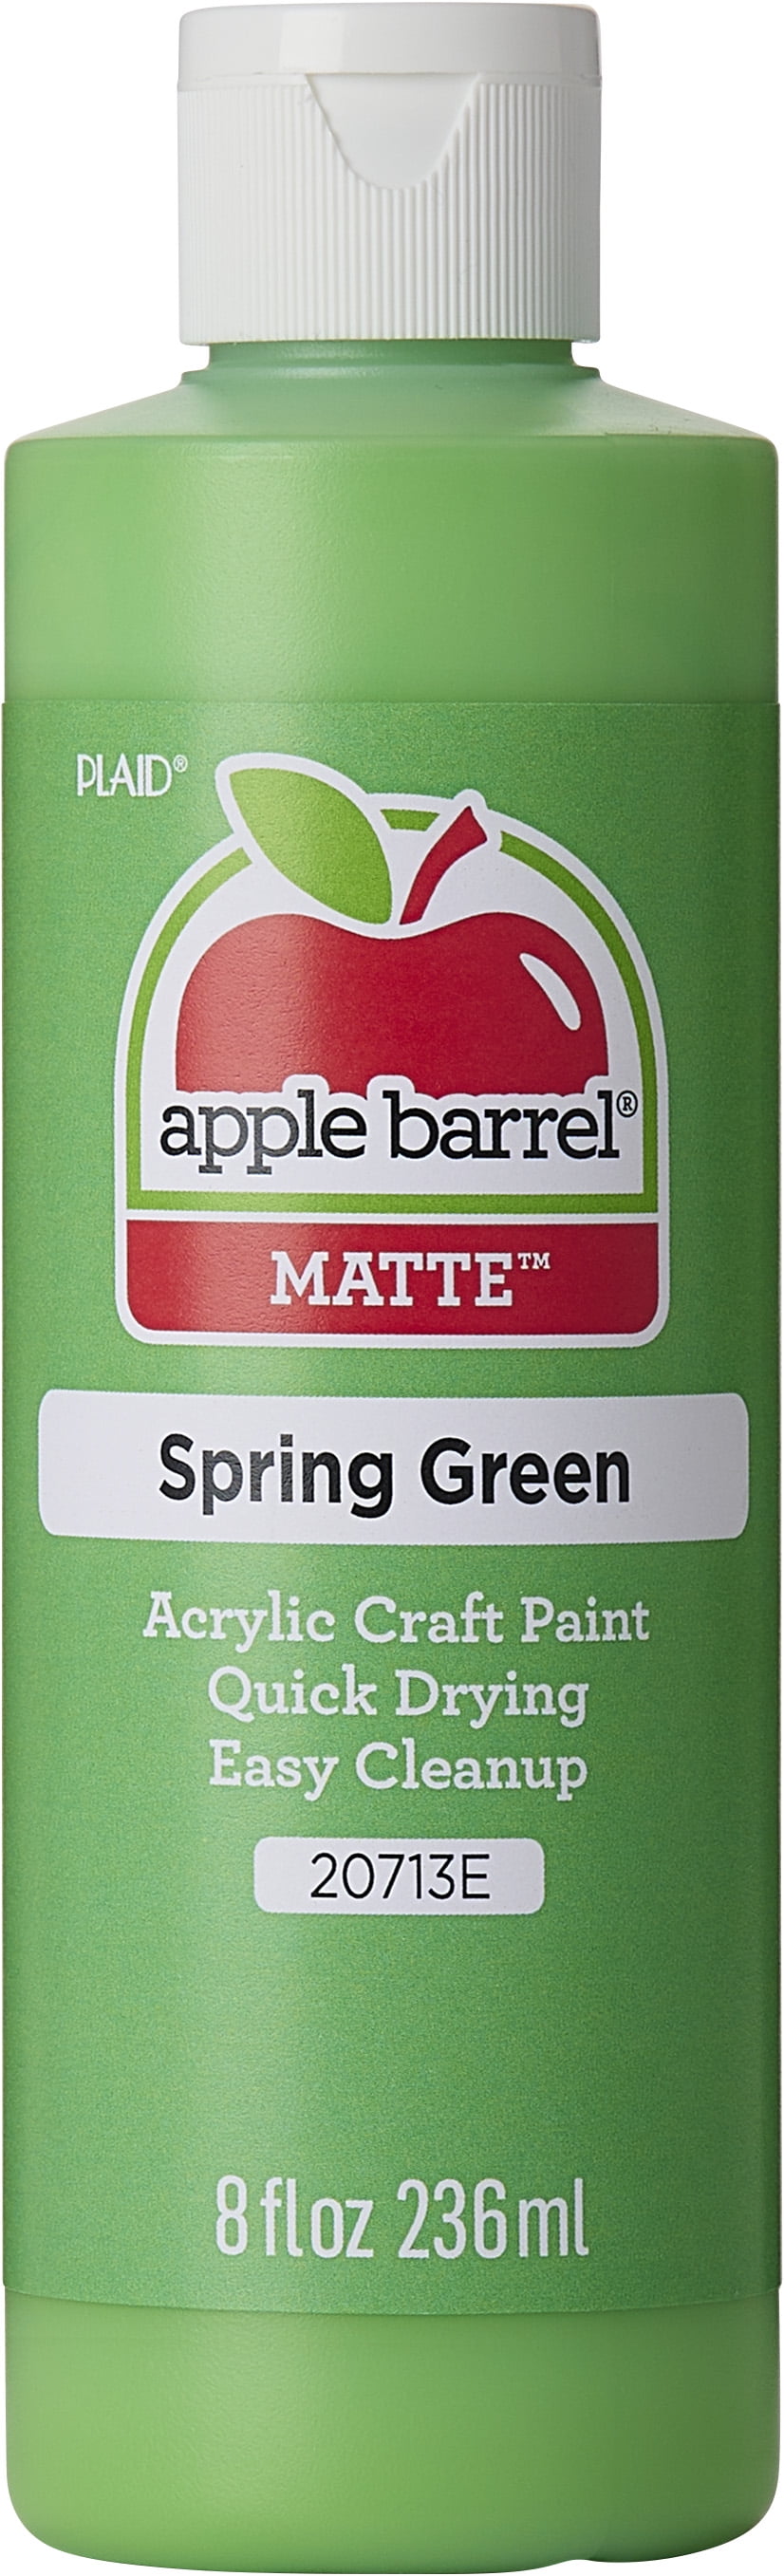 Sage Green Apple Barrel Acrylic Paint - Paints - Painting Supplies